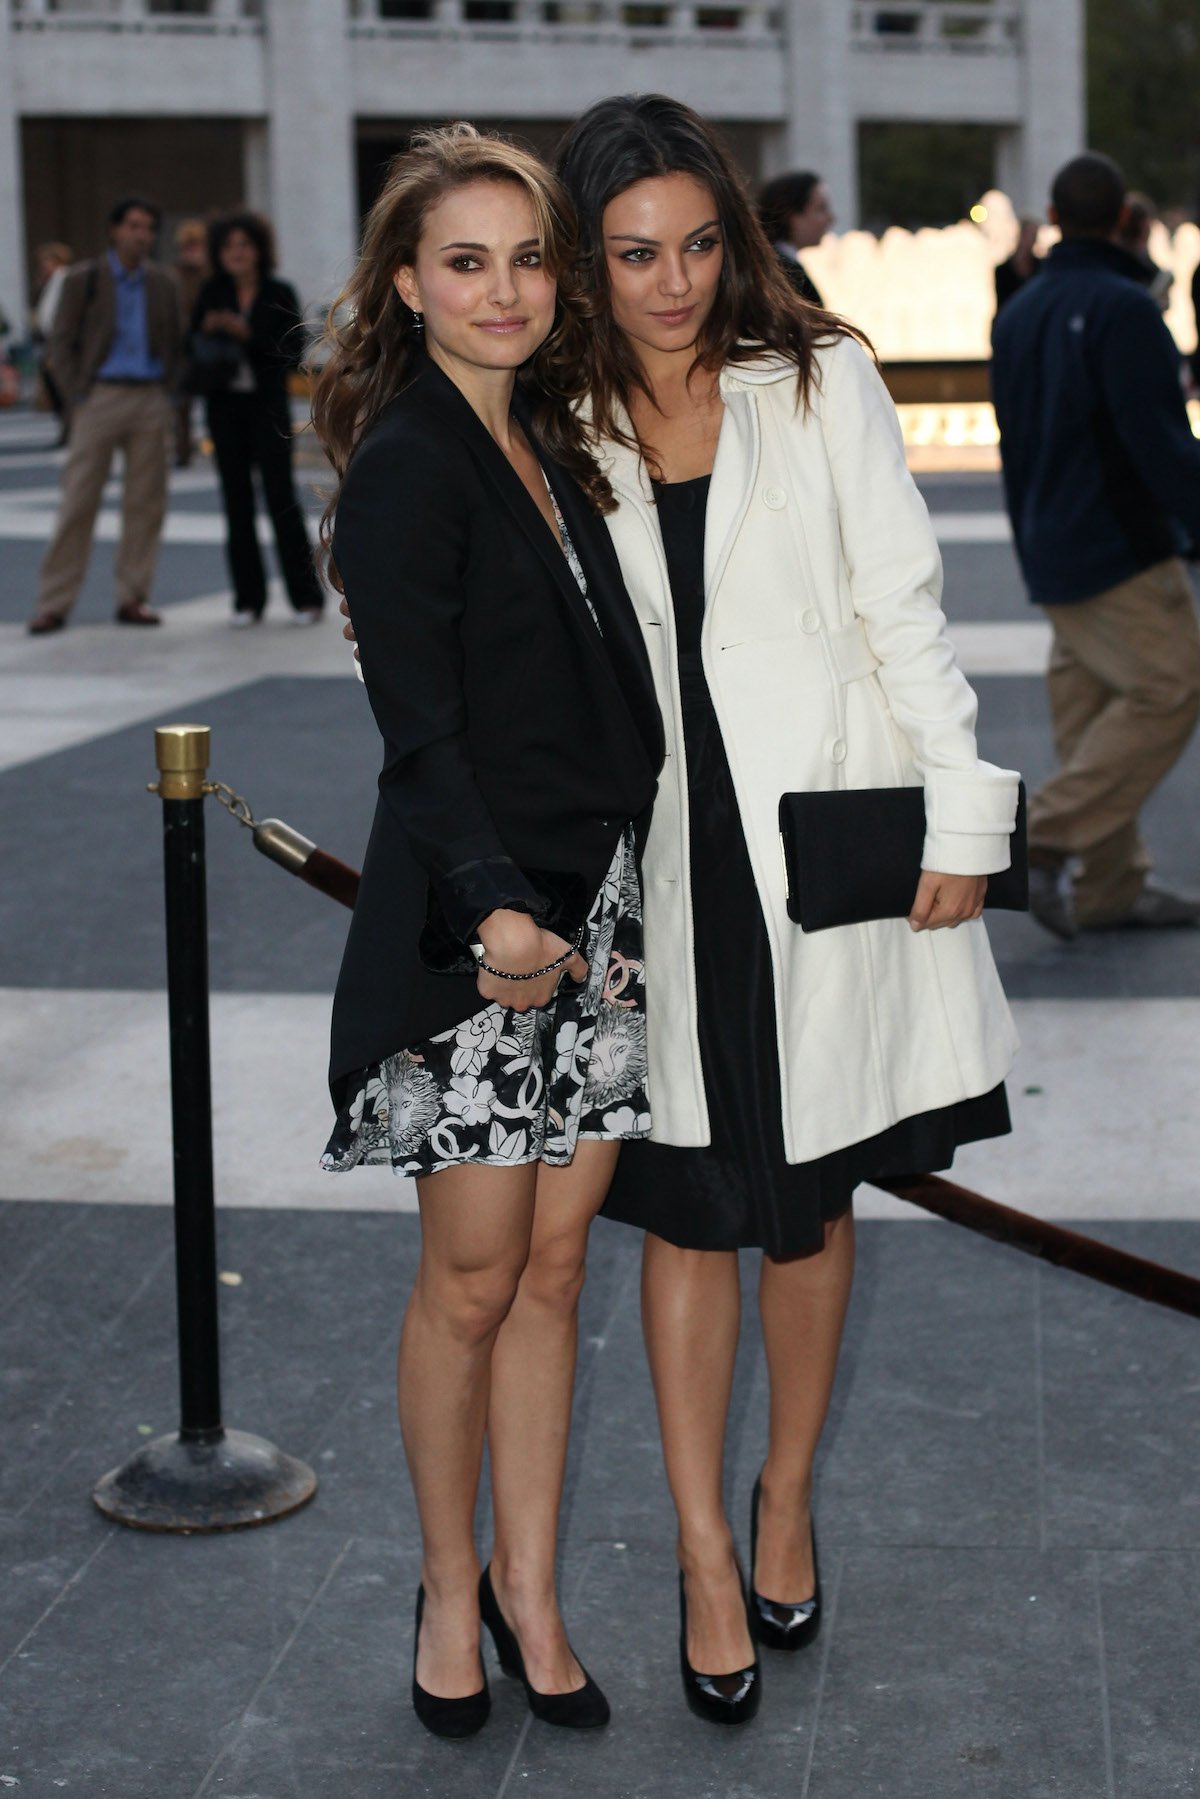 Mila Kunis and Natalie Portman